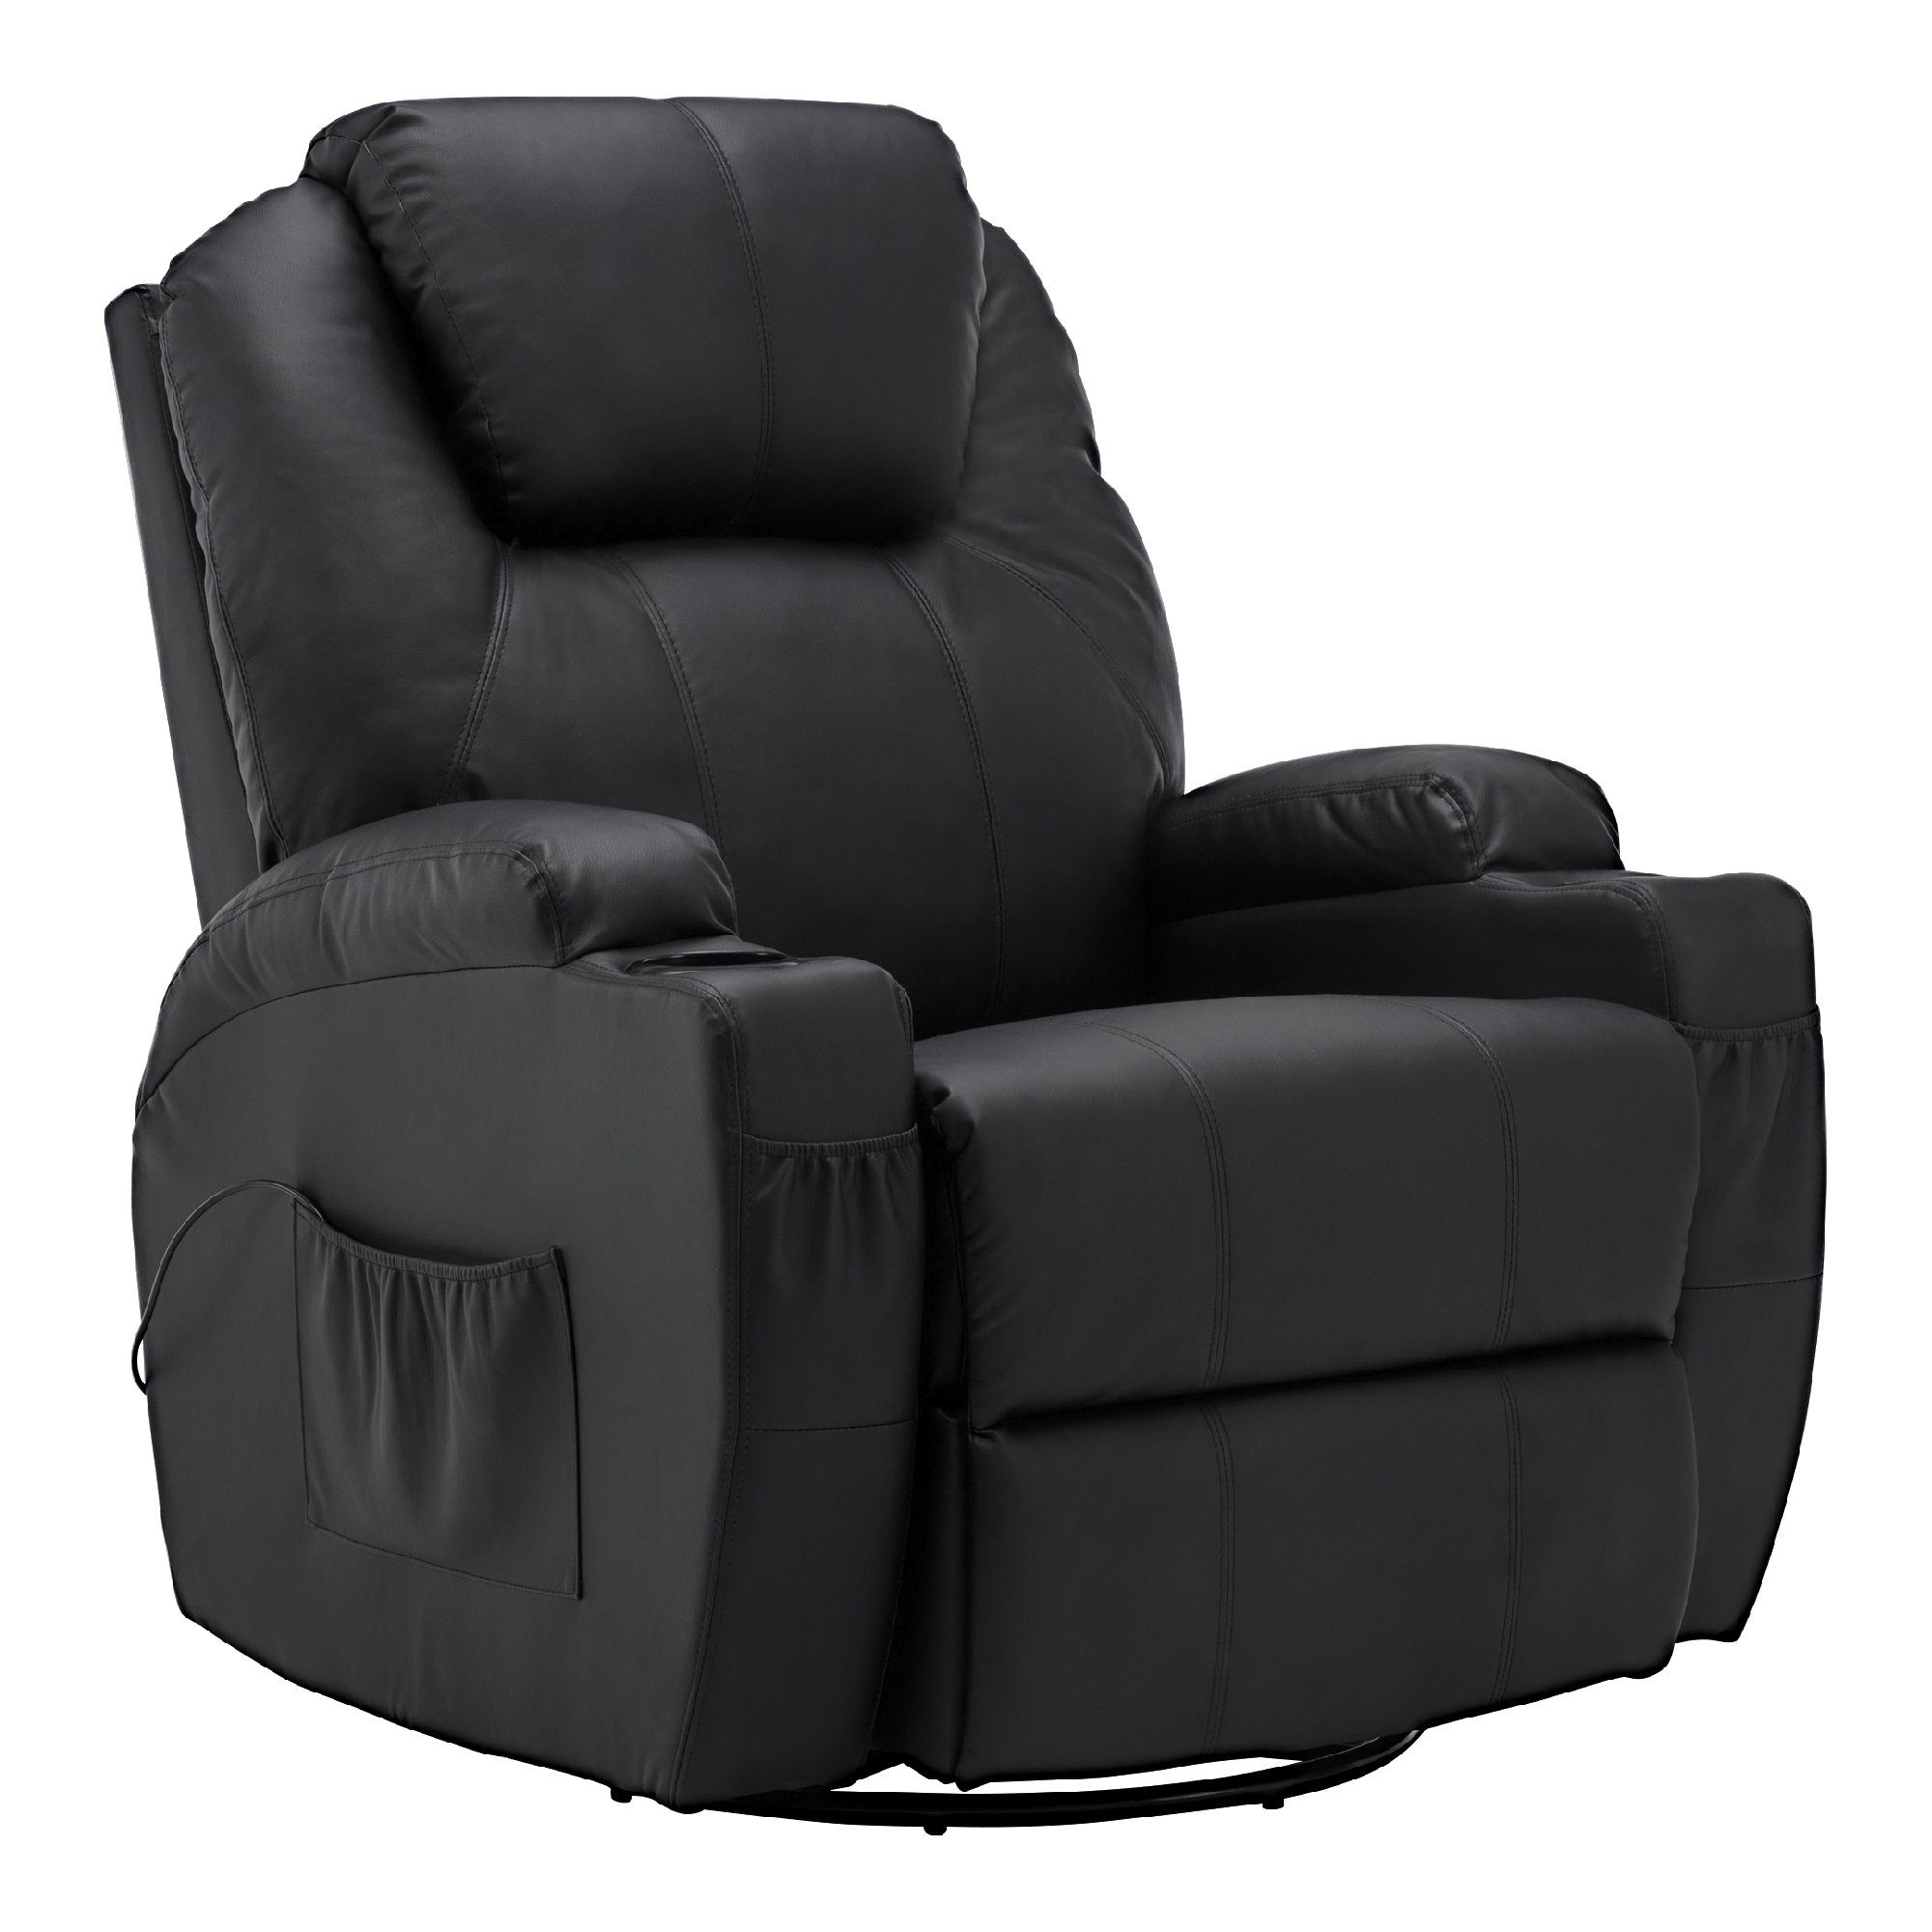 MCombo Relaxsessel MCombo manuell Massagesessel TV-Sessel Relaxsessel 7020, manuell, mit Heizung, 360° drehbar und schwenkbar, 100 × 92 × 109 cm Schwarz